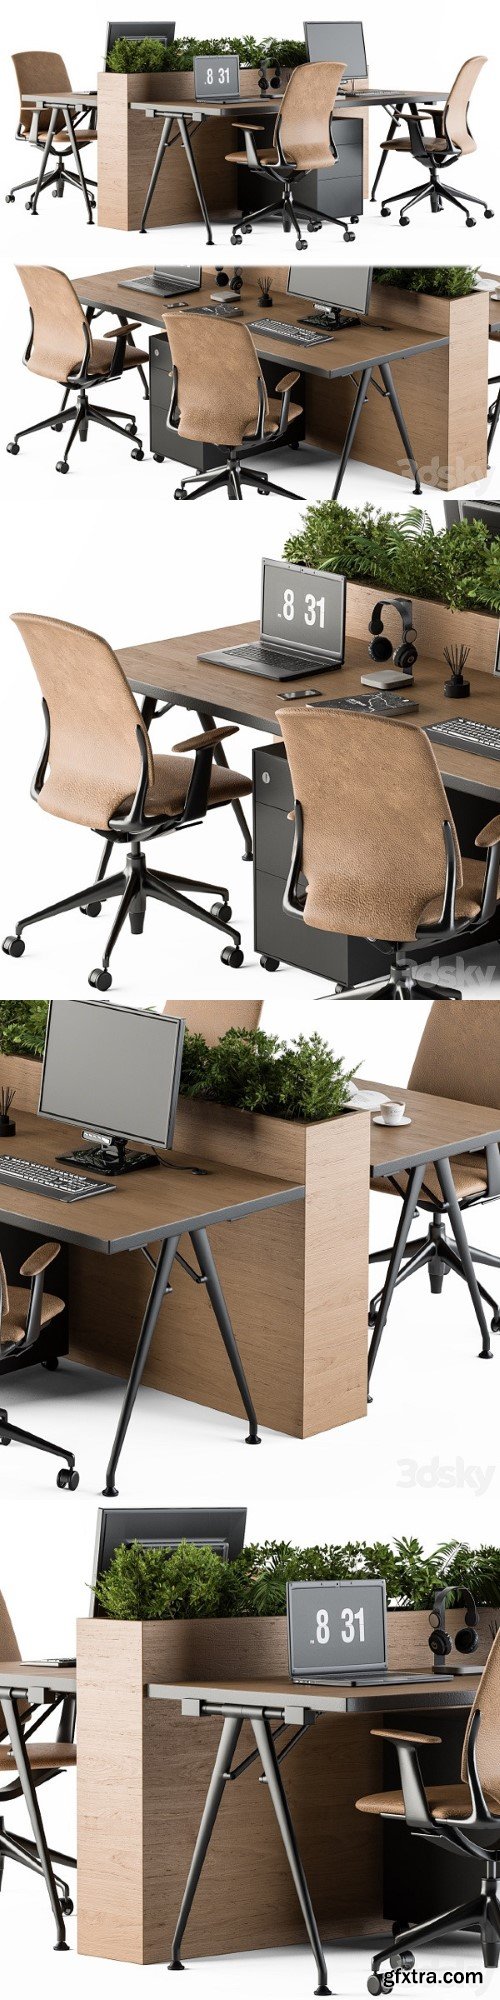 Office Furniture Employee Set 29